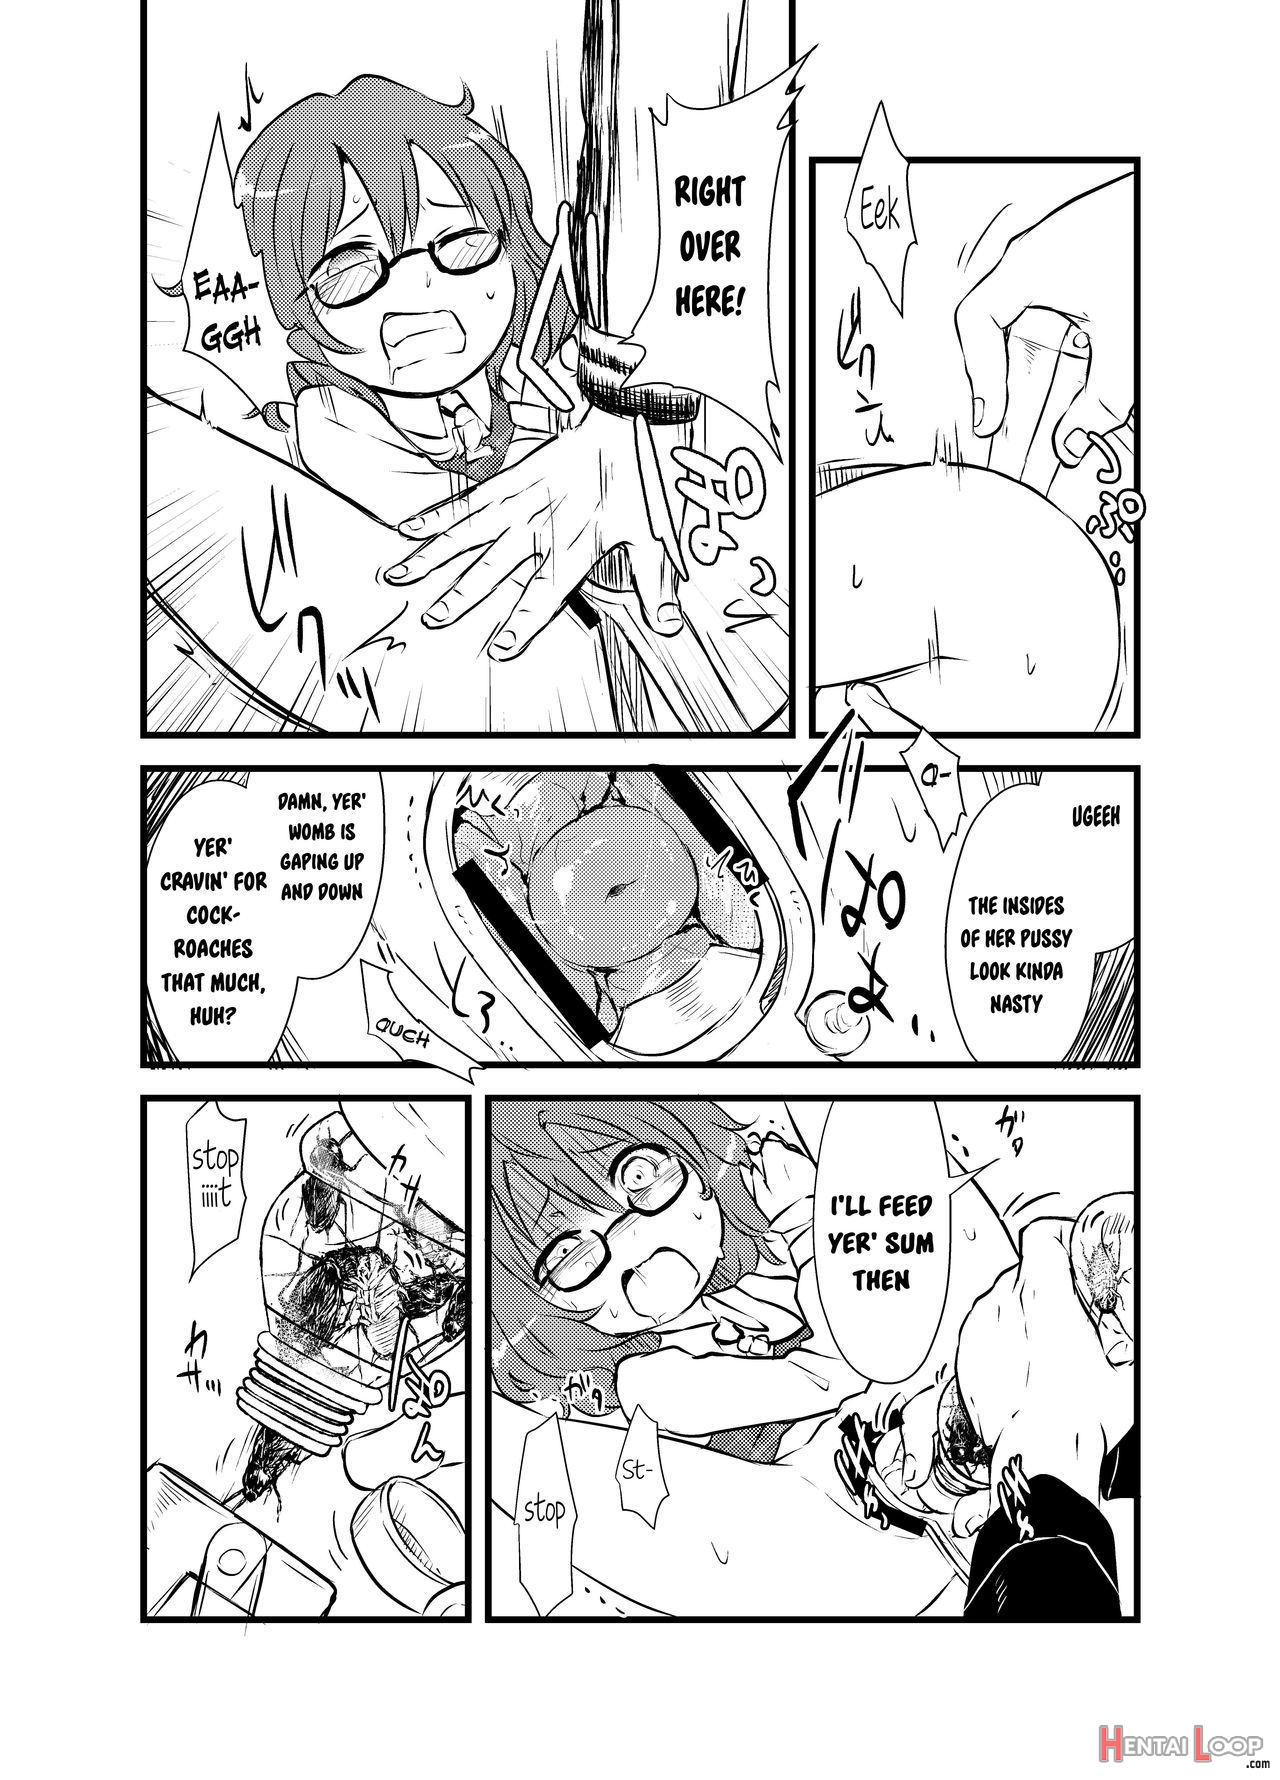 Sumirekochan's Pussy page 7